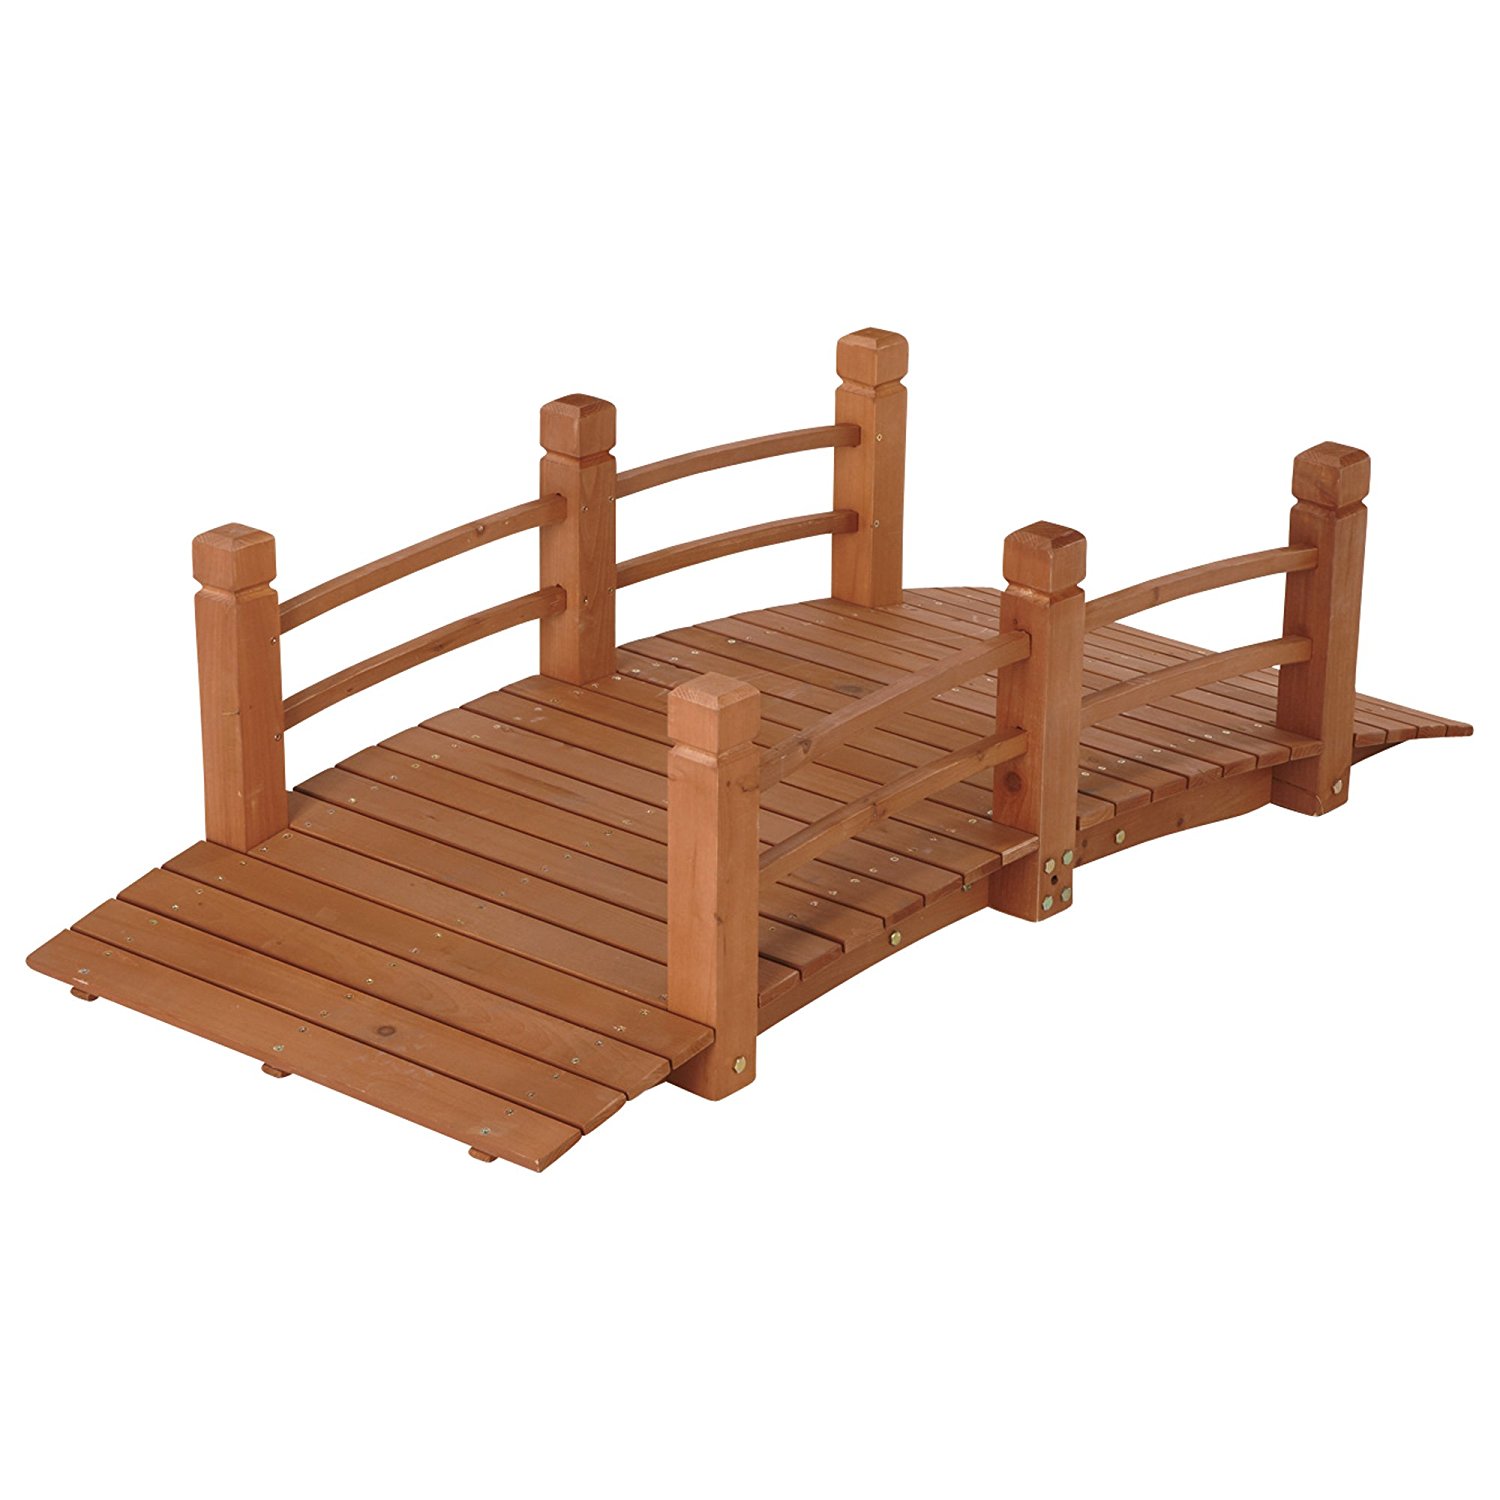 Amazon.com : Wooden Garden Bridge, Model# KMG100858-WP : Garden ...